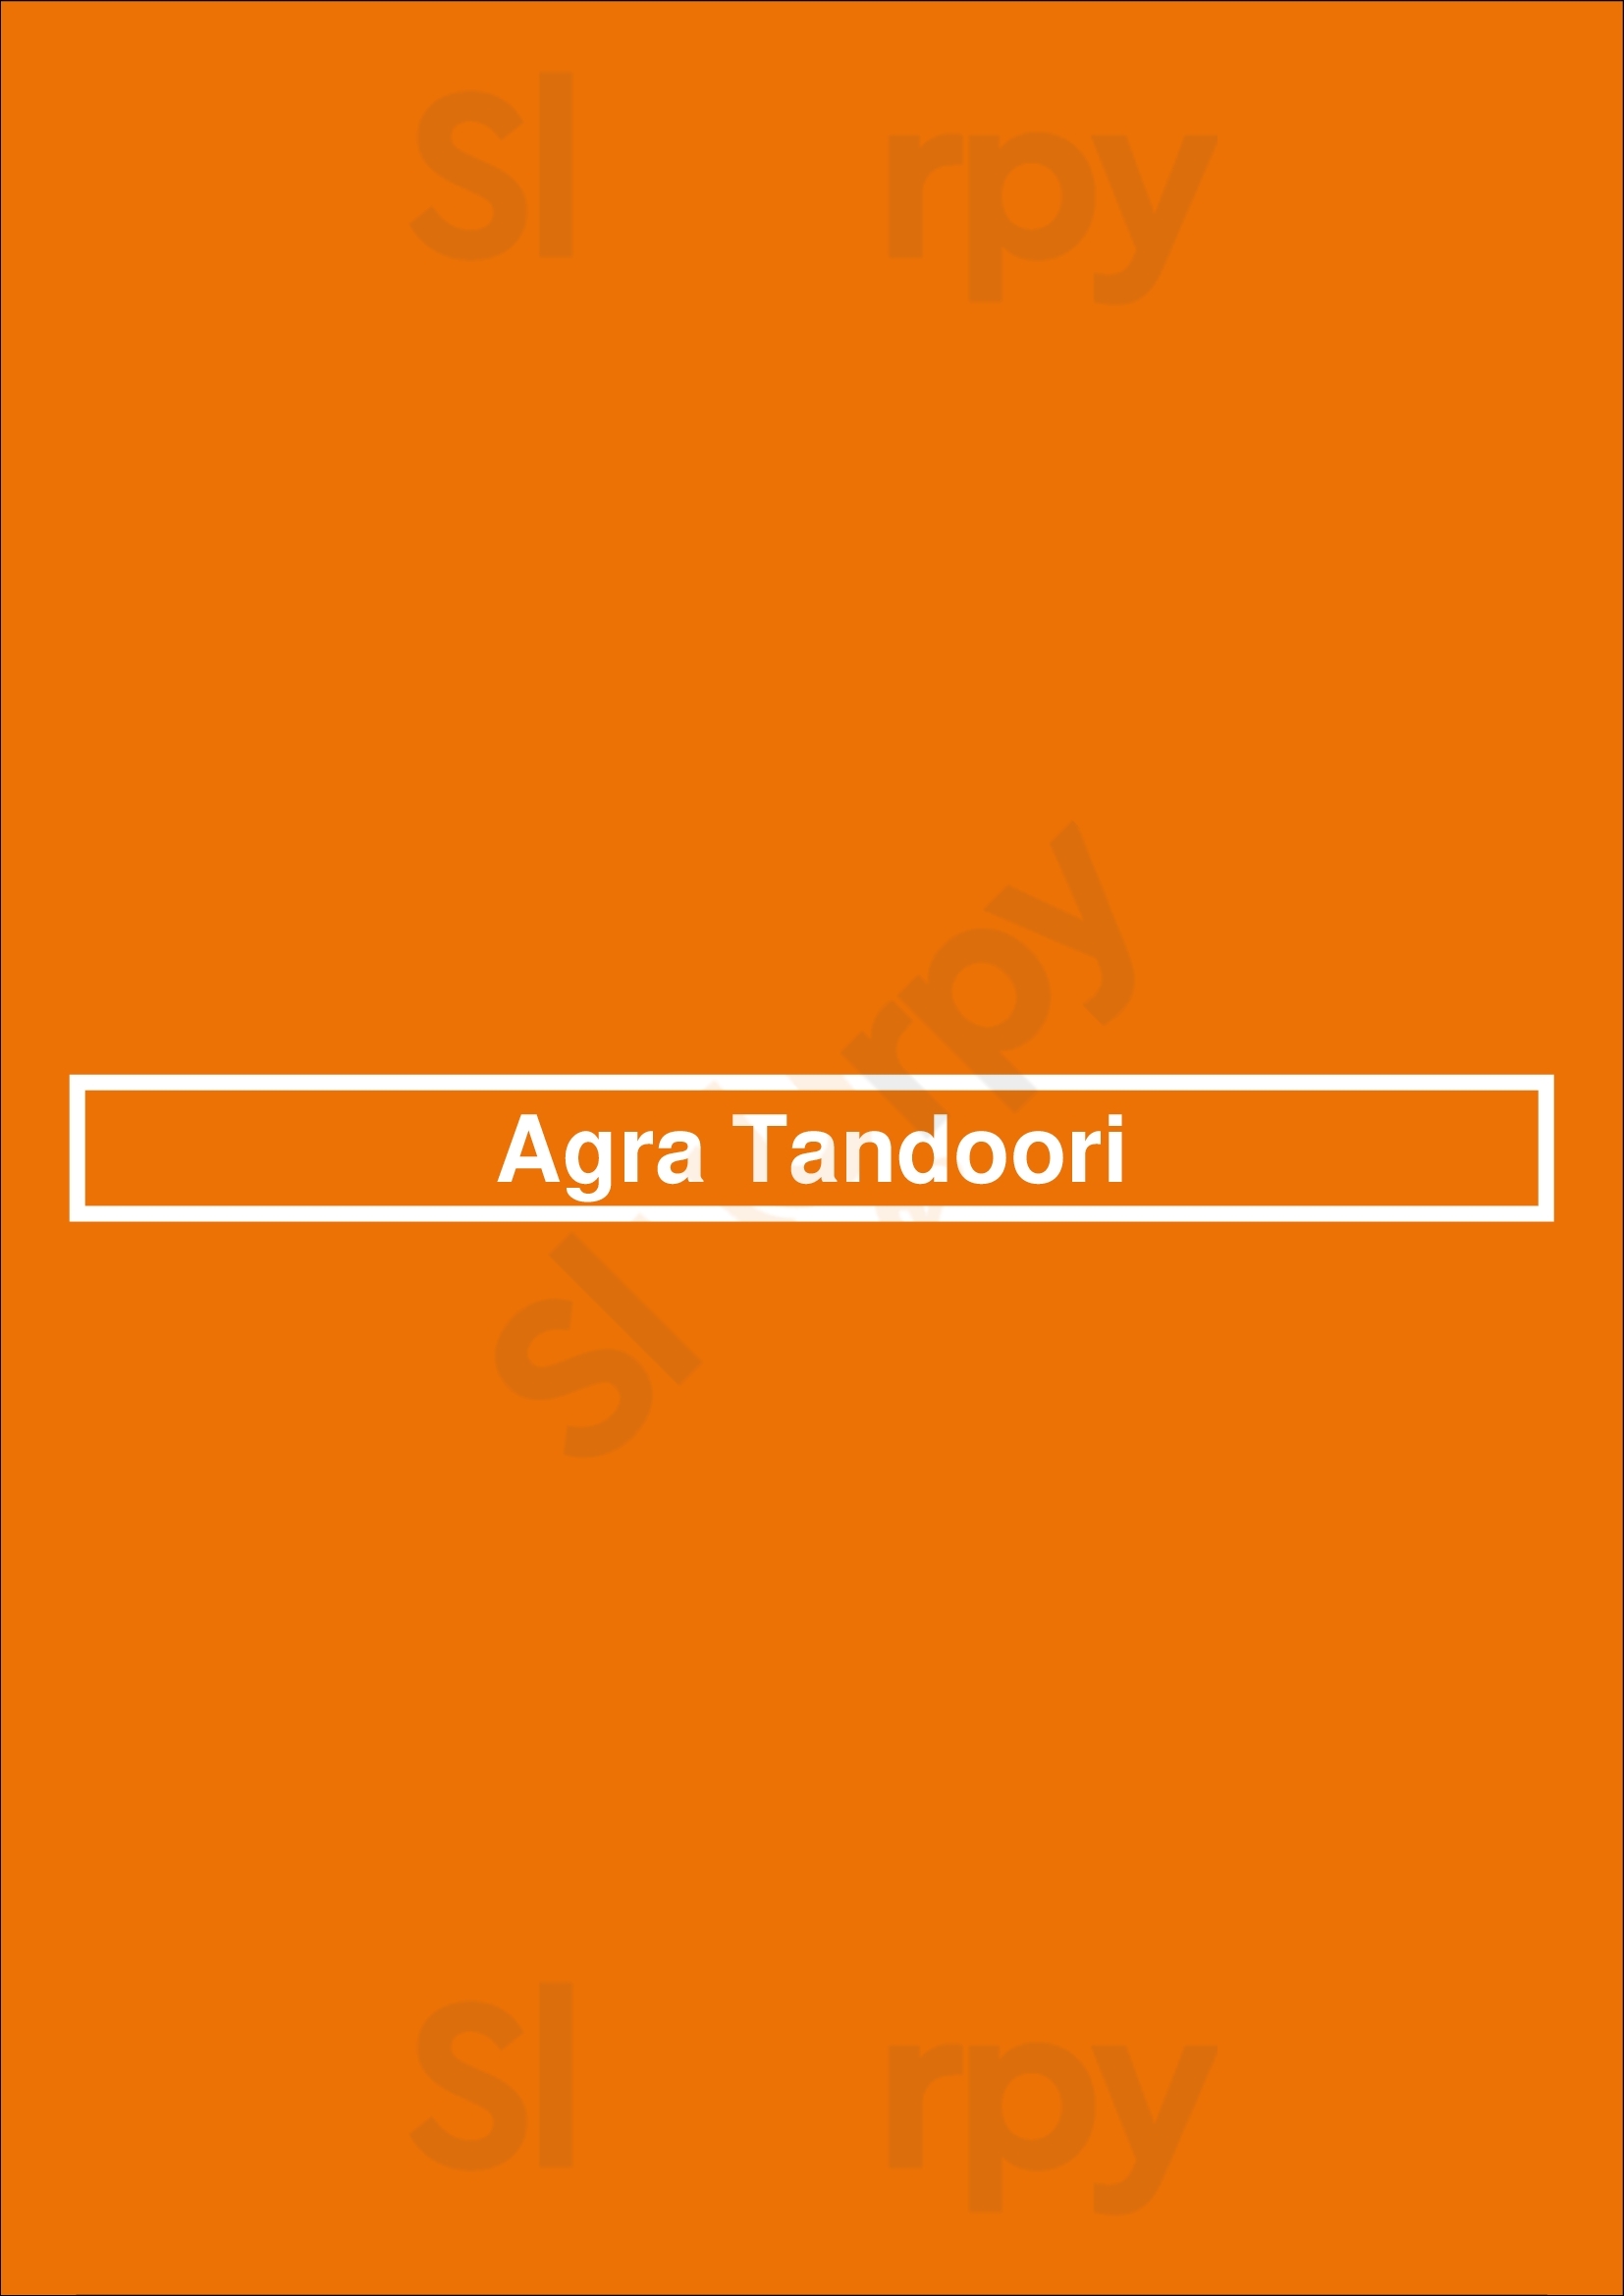 Agra Tandoori Los Angeles Menu - 1